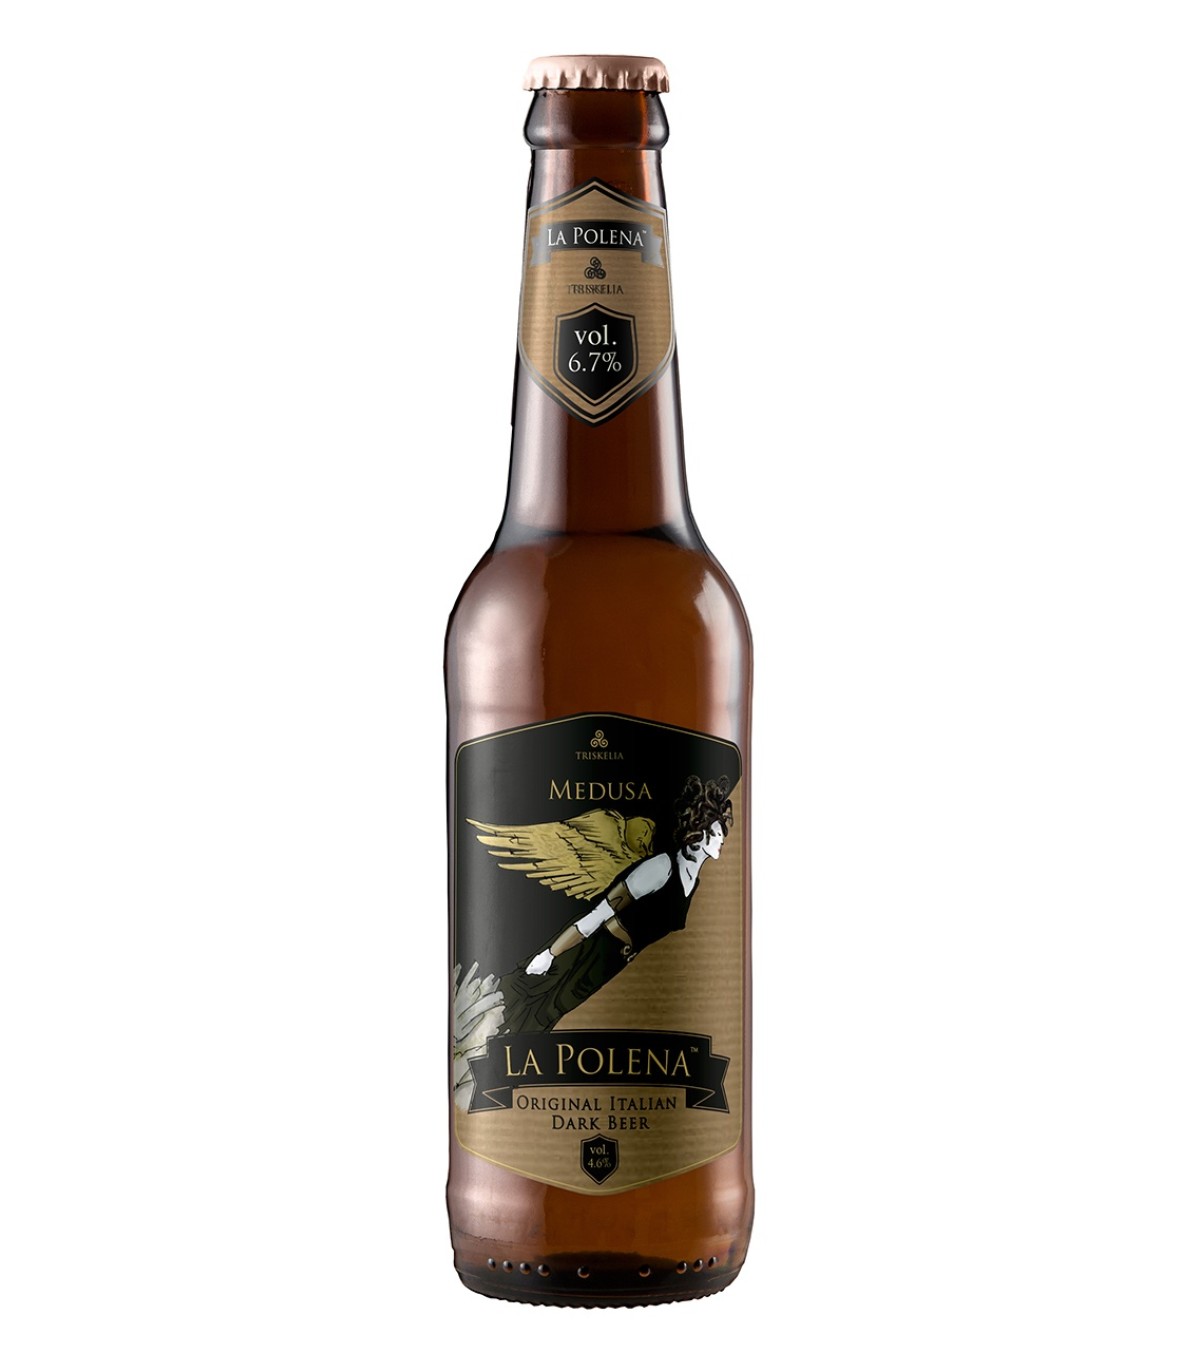 Medusa blond beer 5.5% Vol. - La Polena